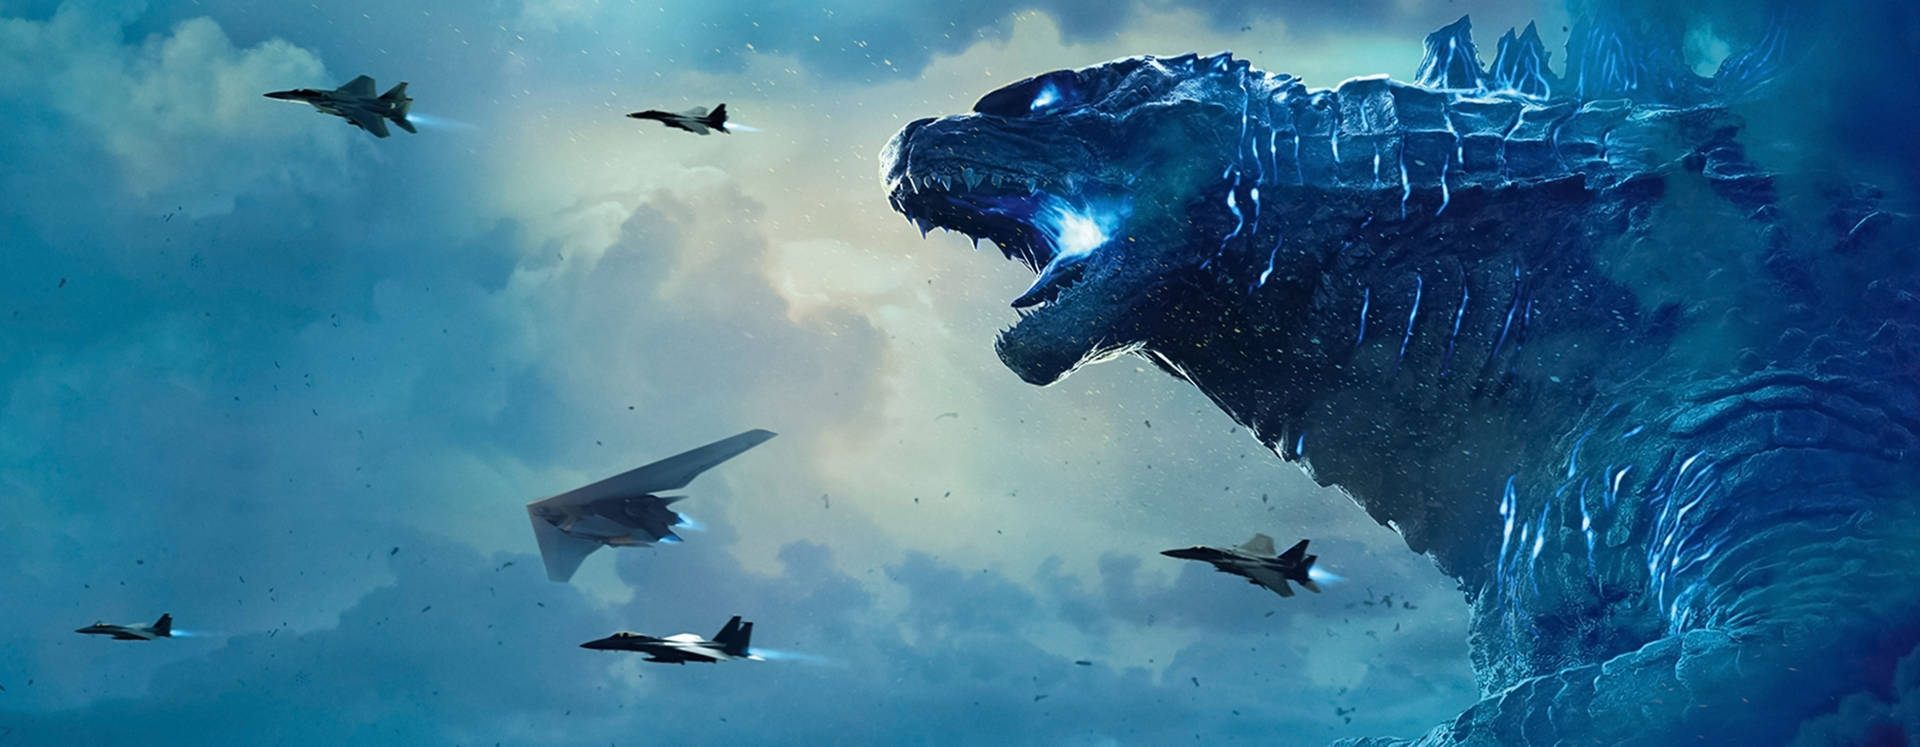 Godzilla on the Attack Wallpaper